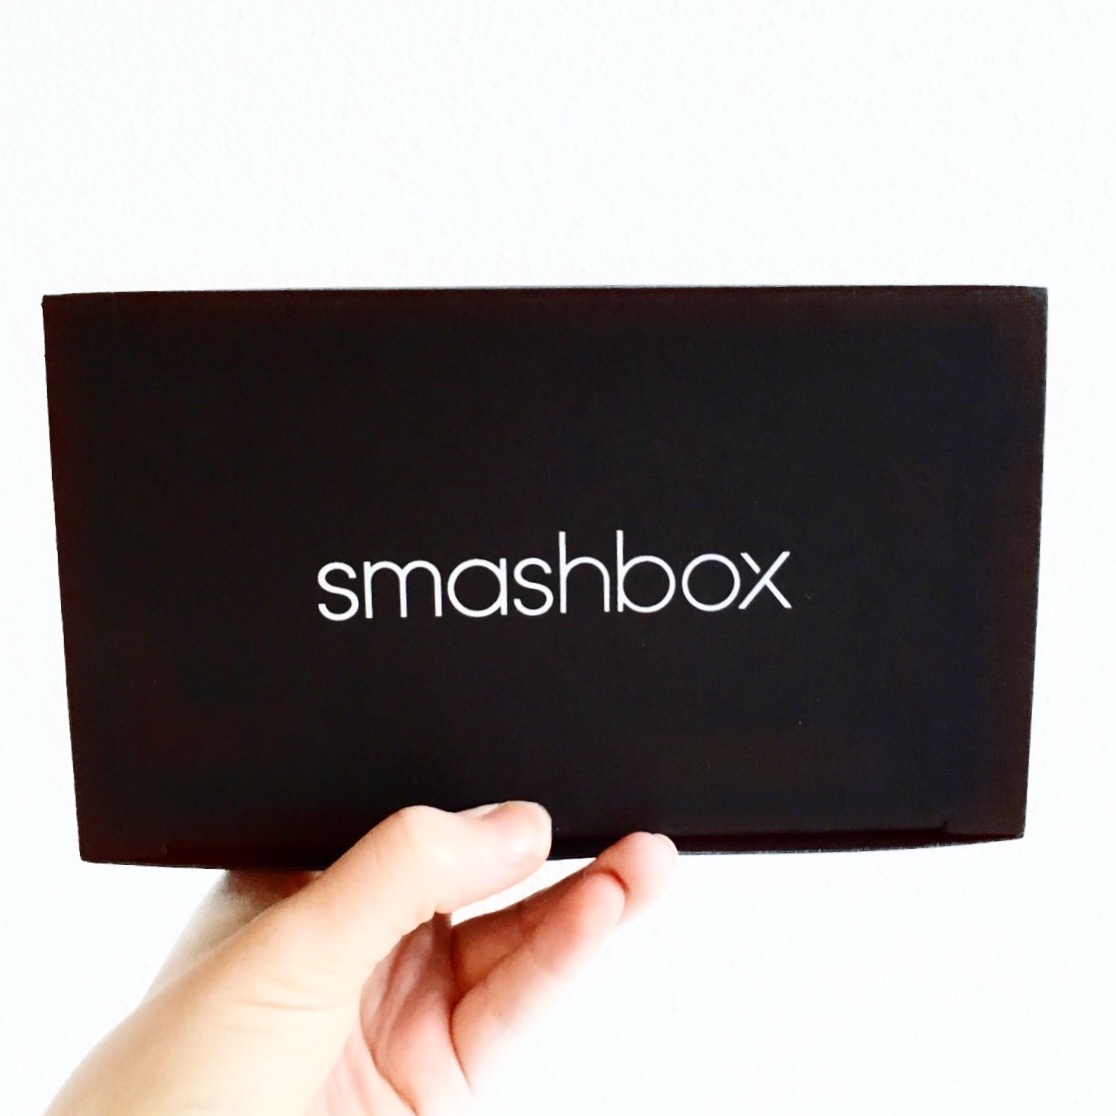 Smashbox Lipsticks